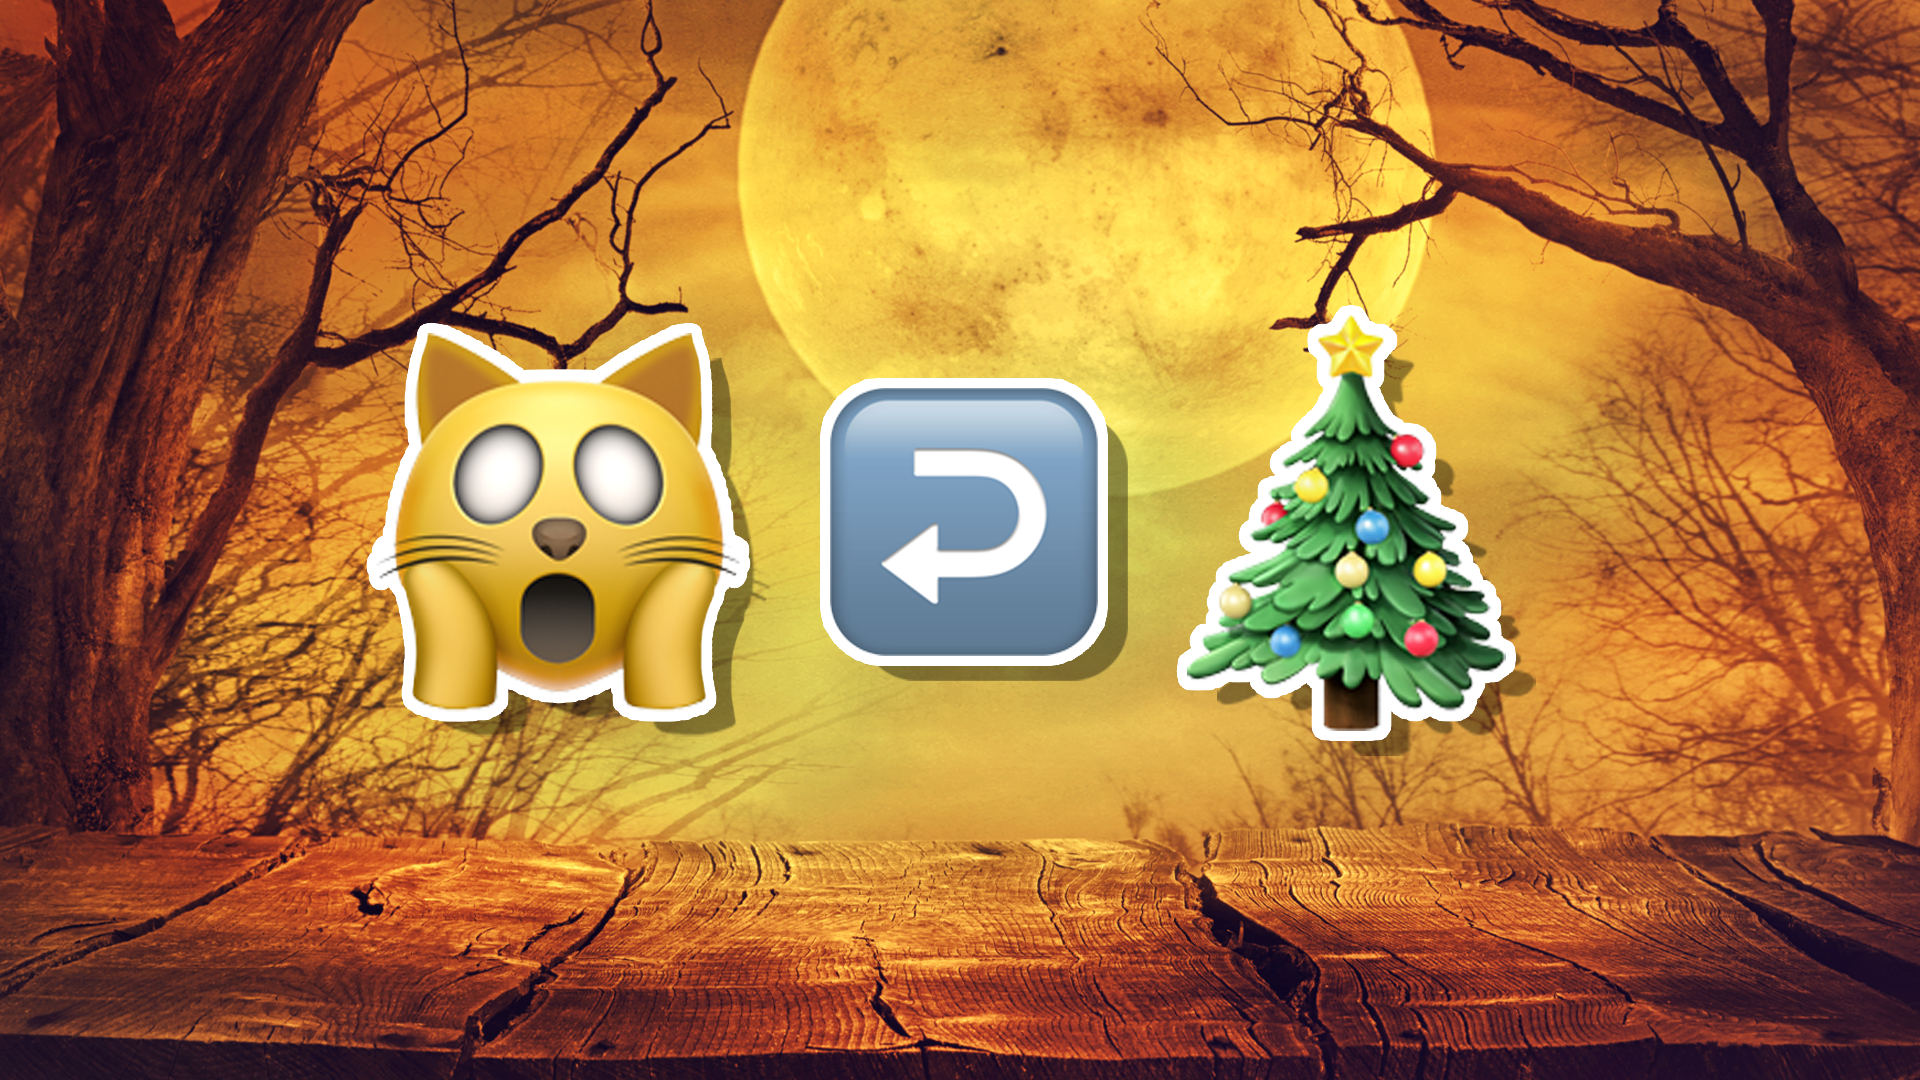 Halloween emojis including a cat, an arrow and a Christmas tree